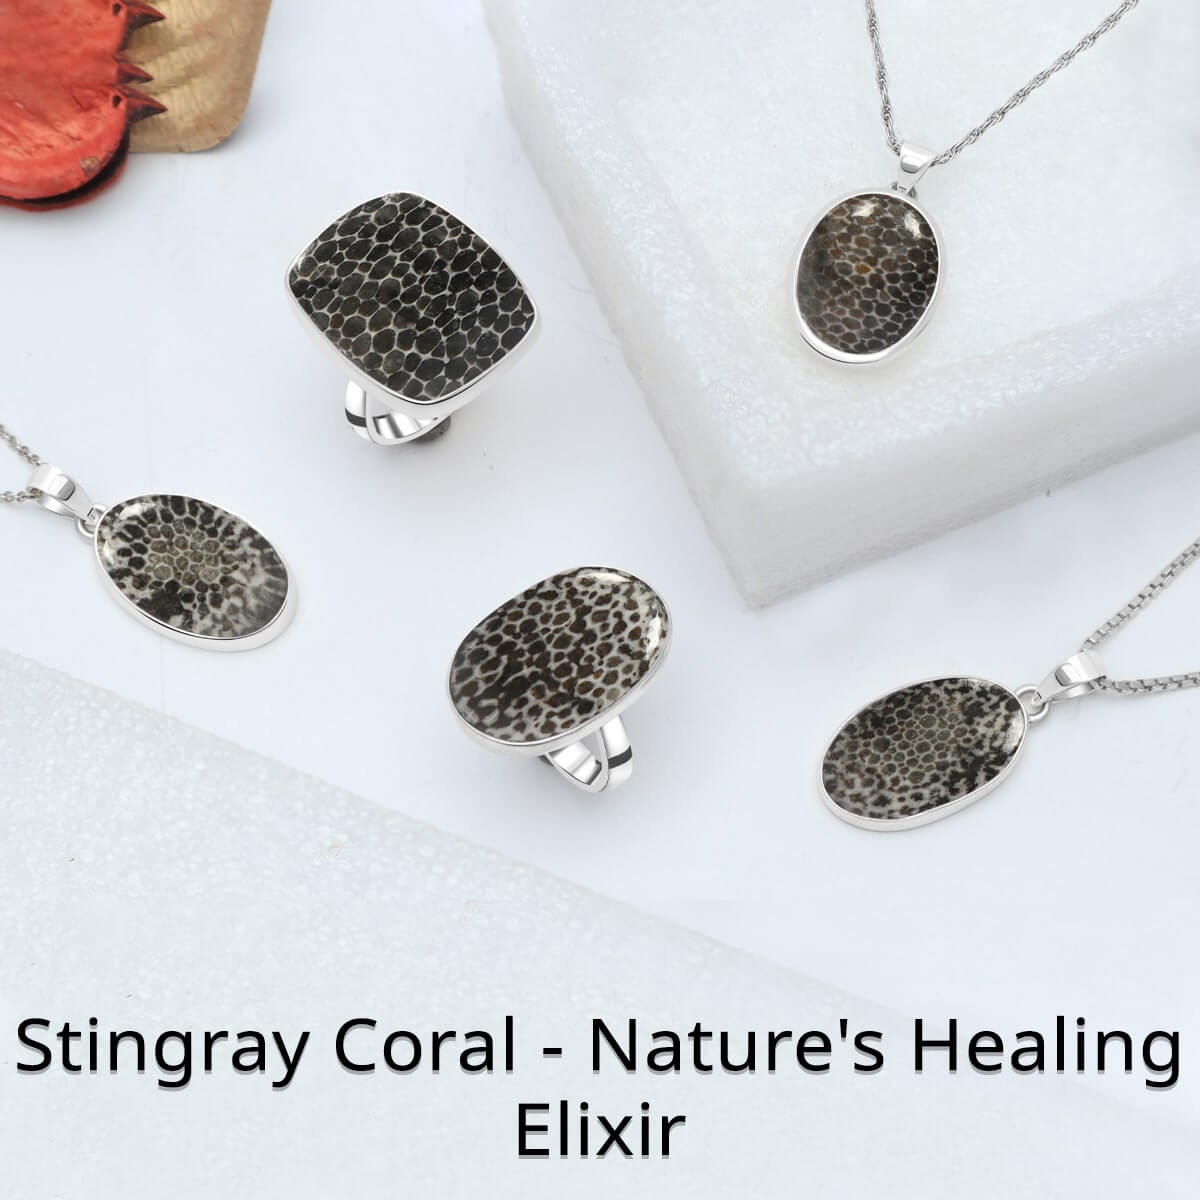 Stingray Coral Gemstone Healing properties